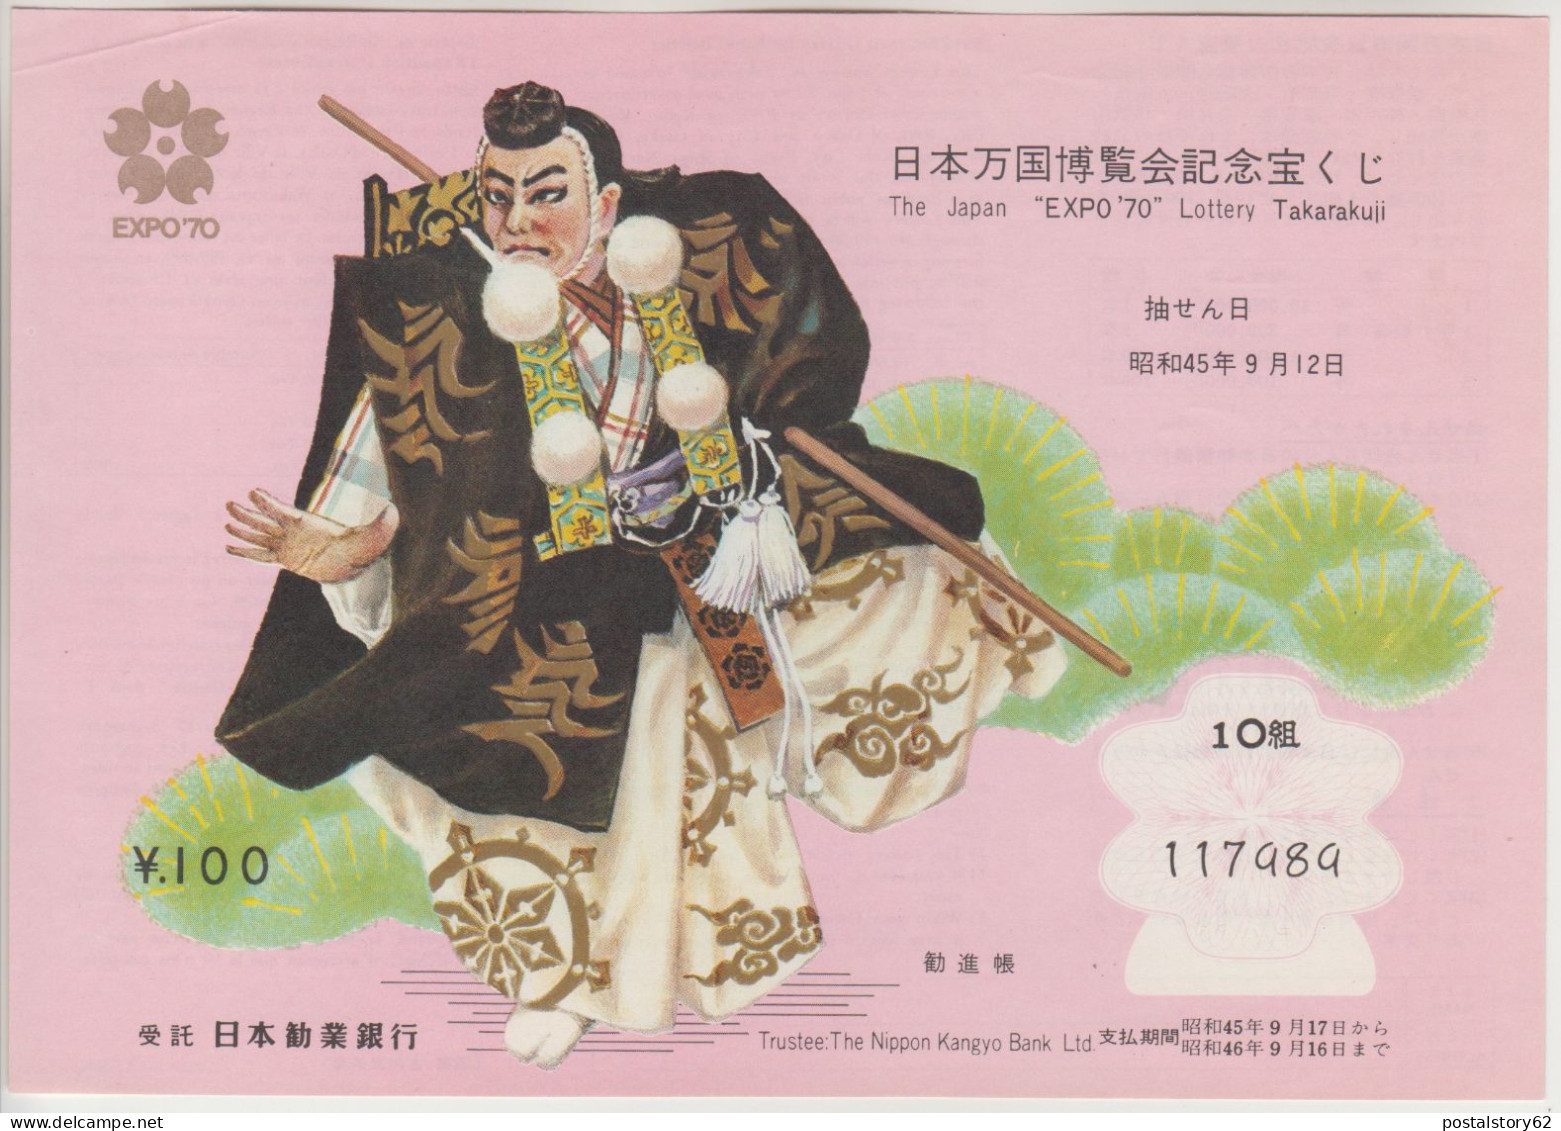 Giappone  " EXPO ' 70 " Lotteria . Trustee : The Nippon Kangyo Bank LTD. ( 5 biglietti con cartellina )